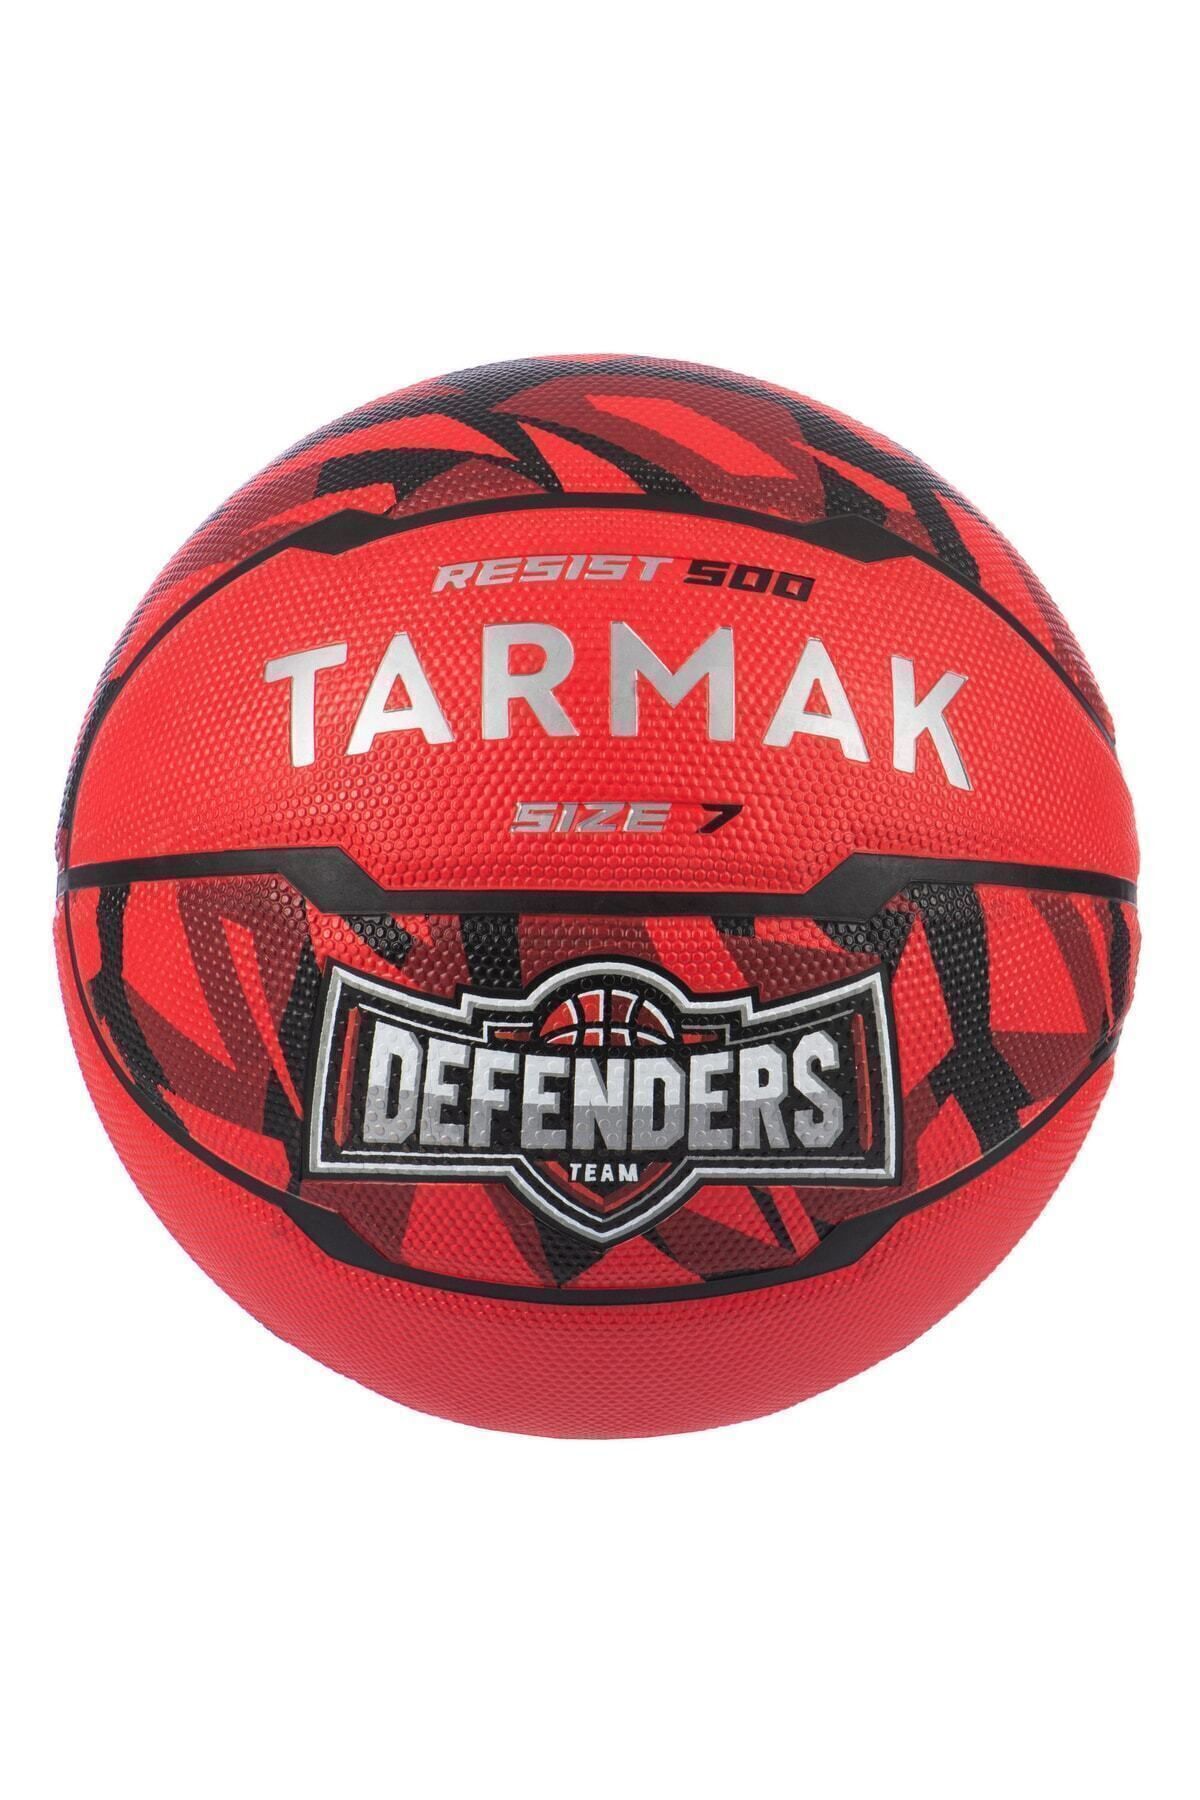 Decathlon Tarmak Basketbol Topu - 7 Numara - Kırmızı - R500 T7